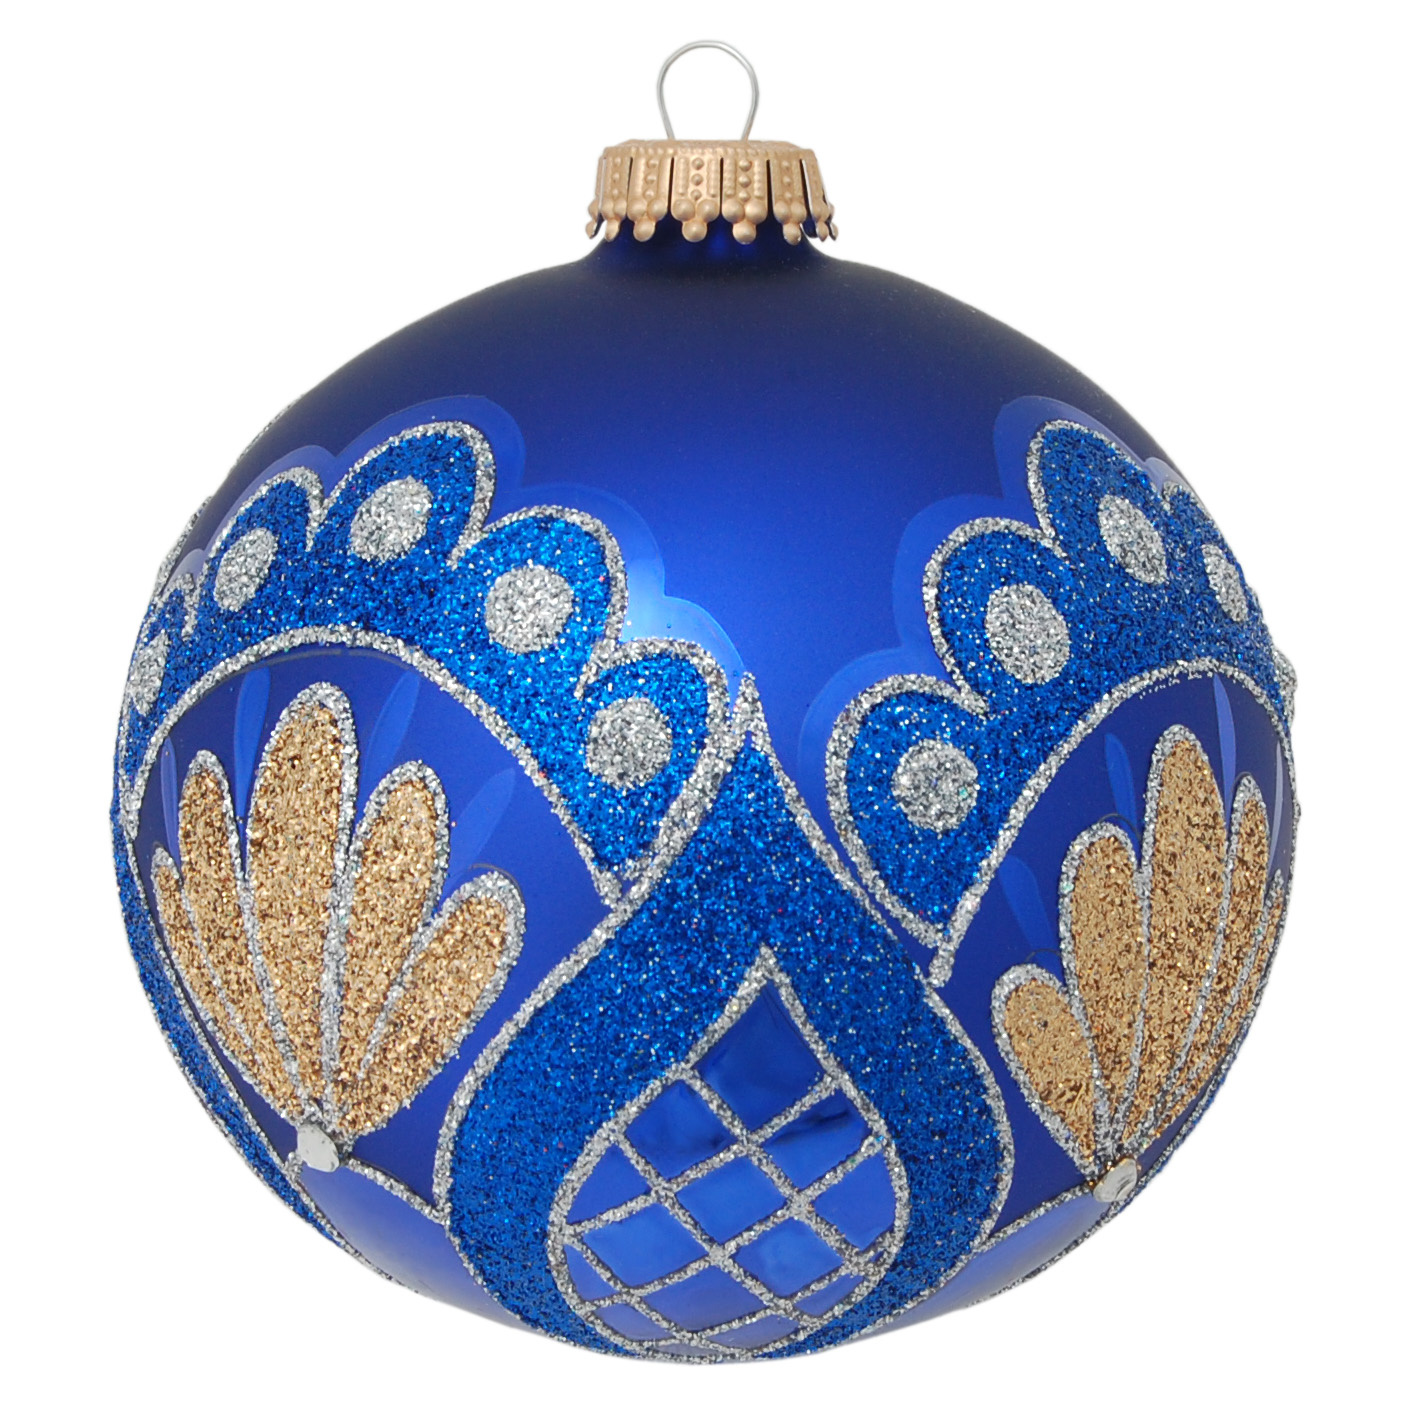 rustig aan Airco Ongemak Prachtige Blauwe Kerstbal met Gouden en Blauwe Glitters